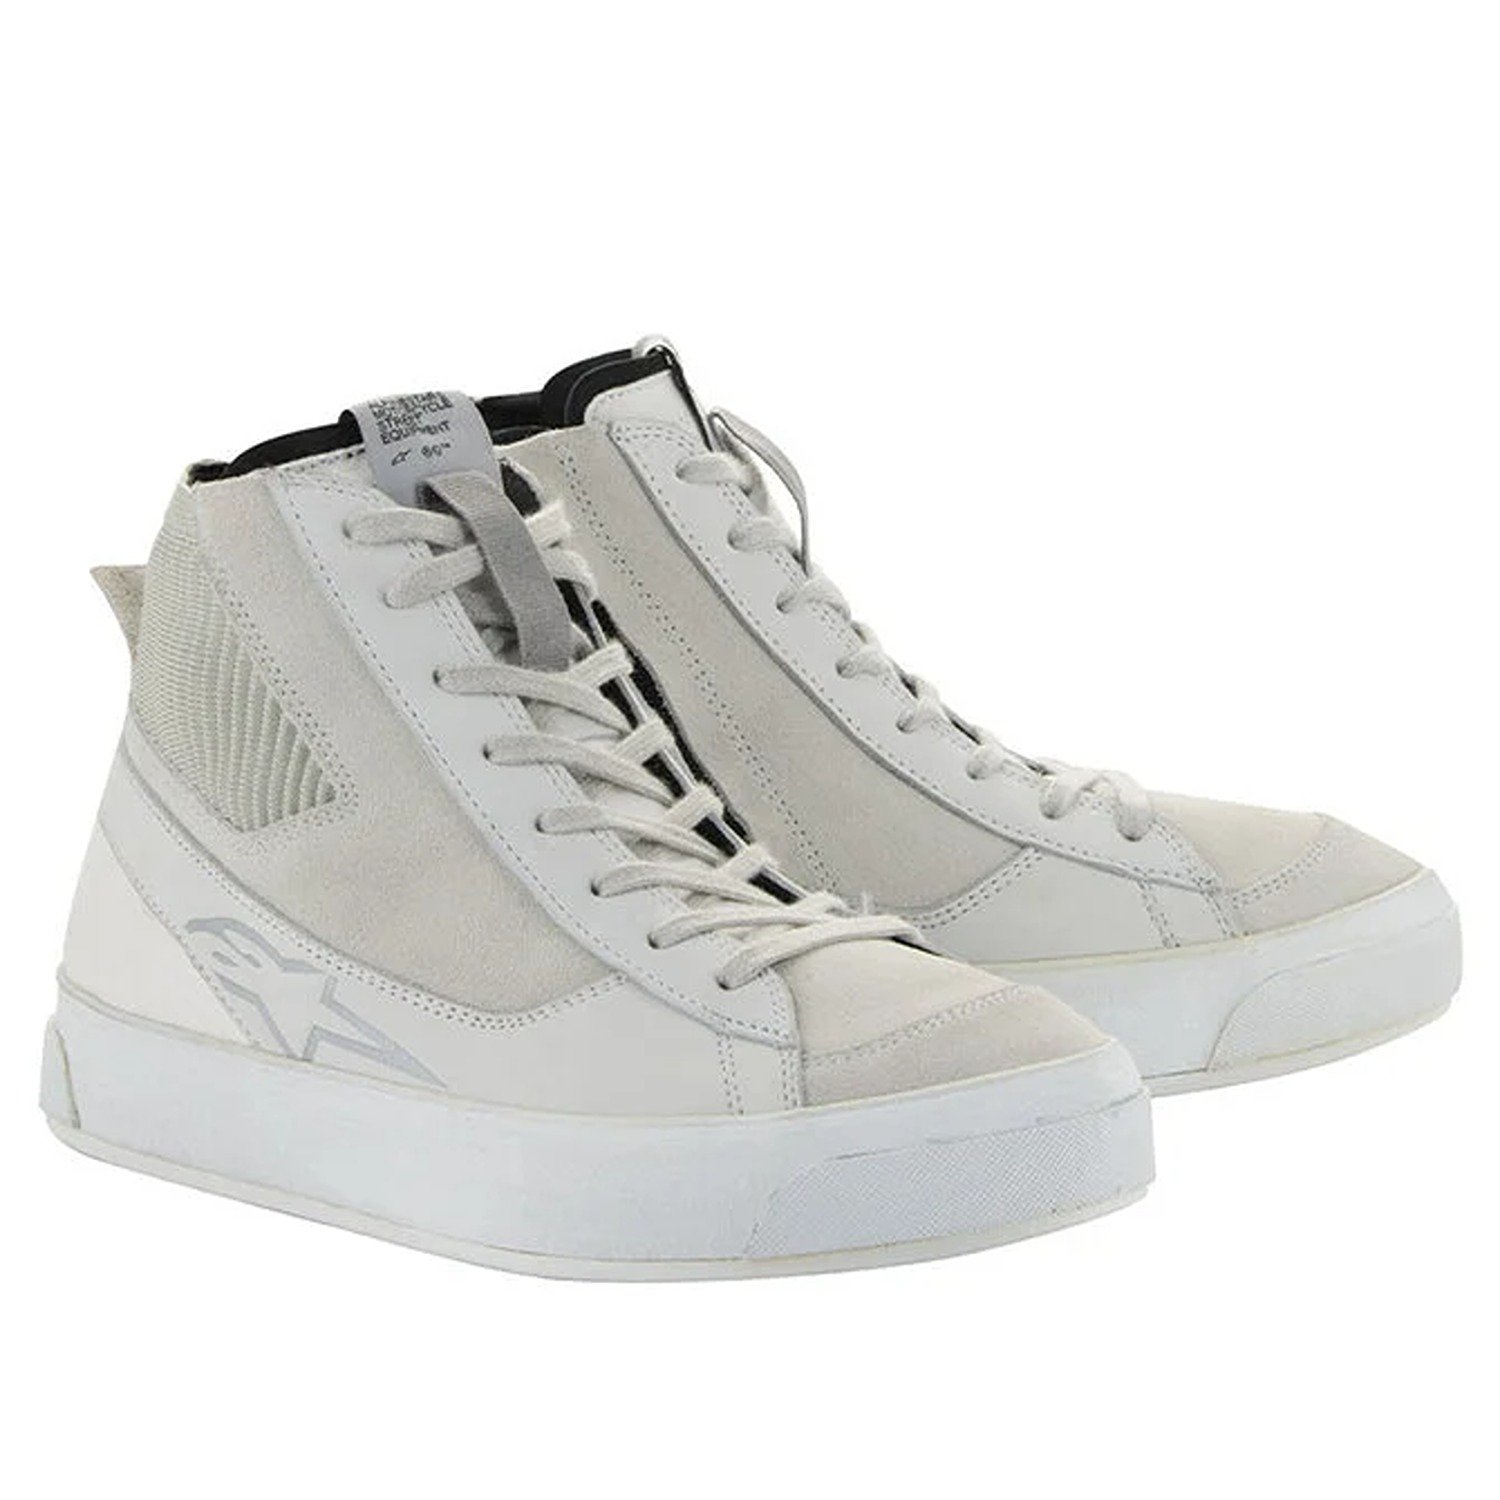 Image of Alpinestars Stella Stated Podium Shoes White Cool Gray Size US 105 ID 8059347350196